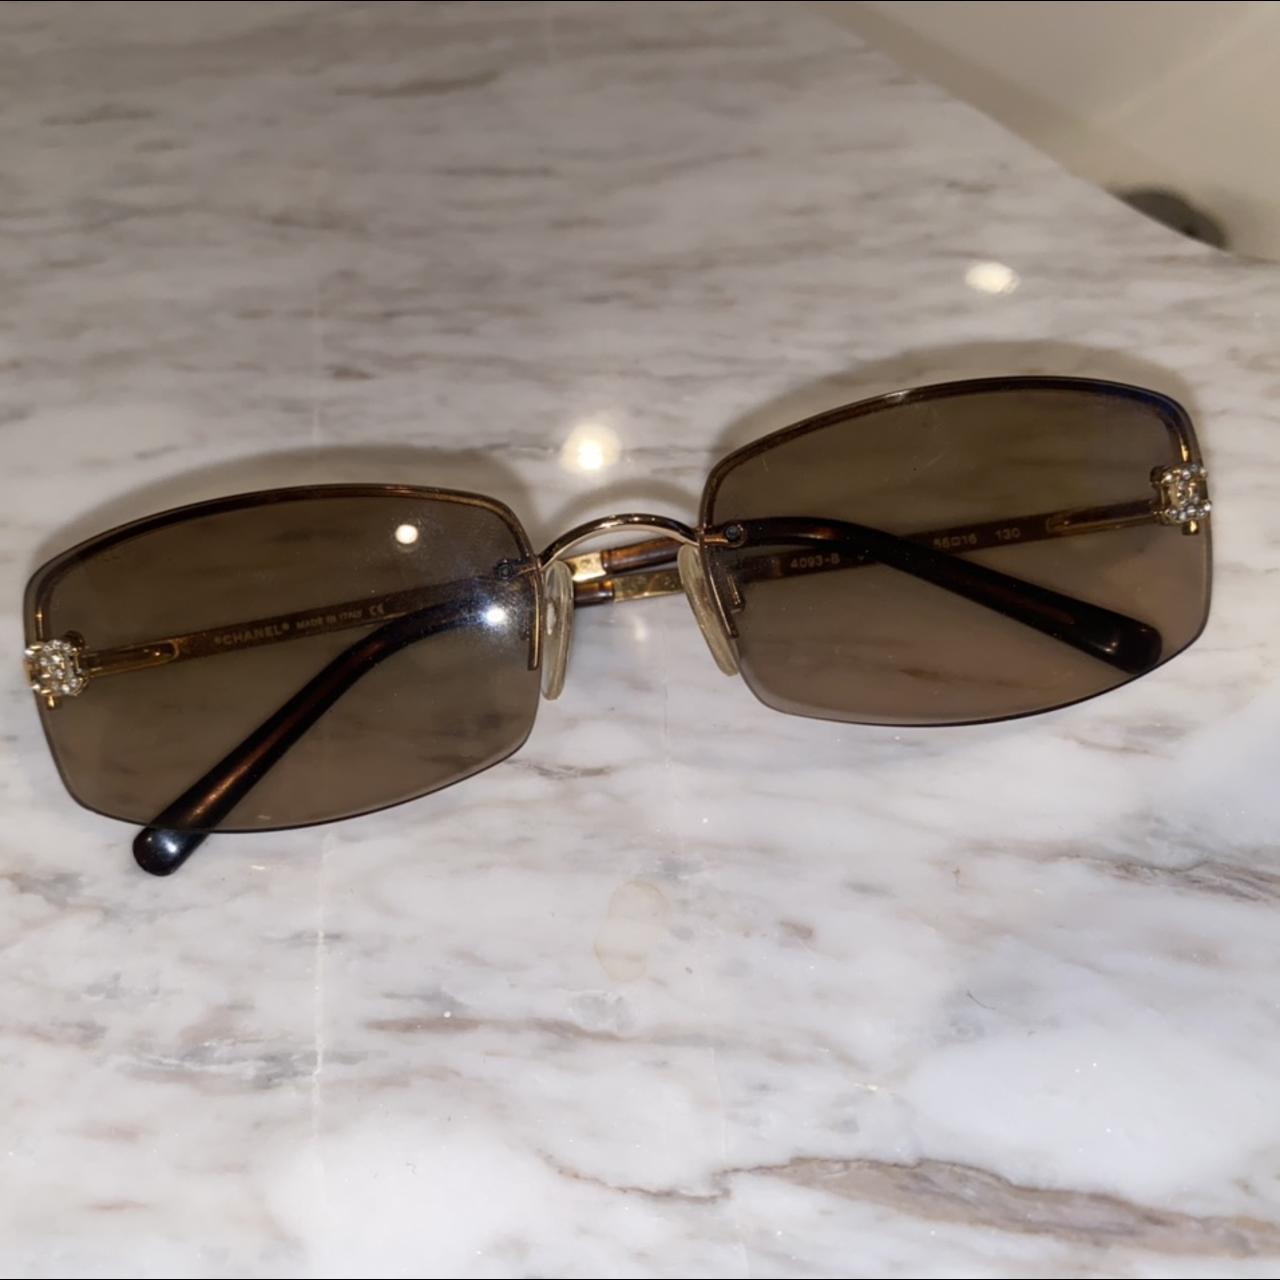 Vintage Chanel sunglasses #chanel #sunglasses #vintage